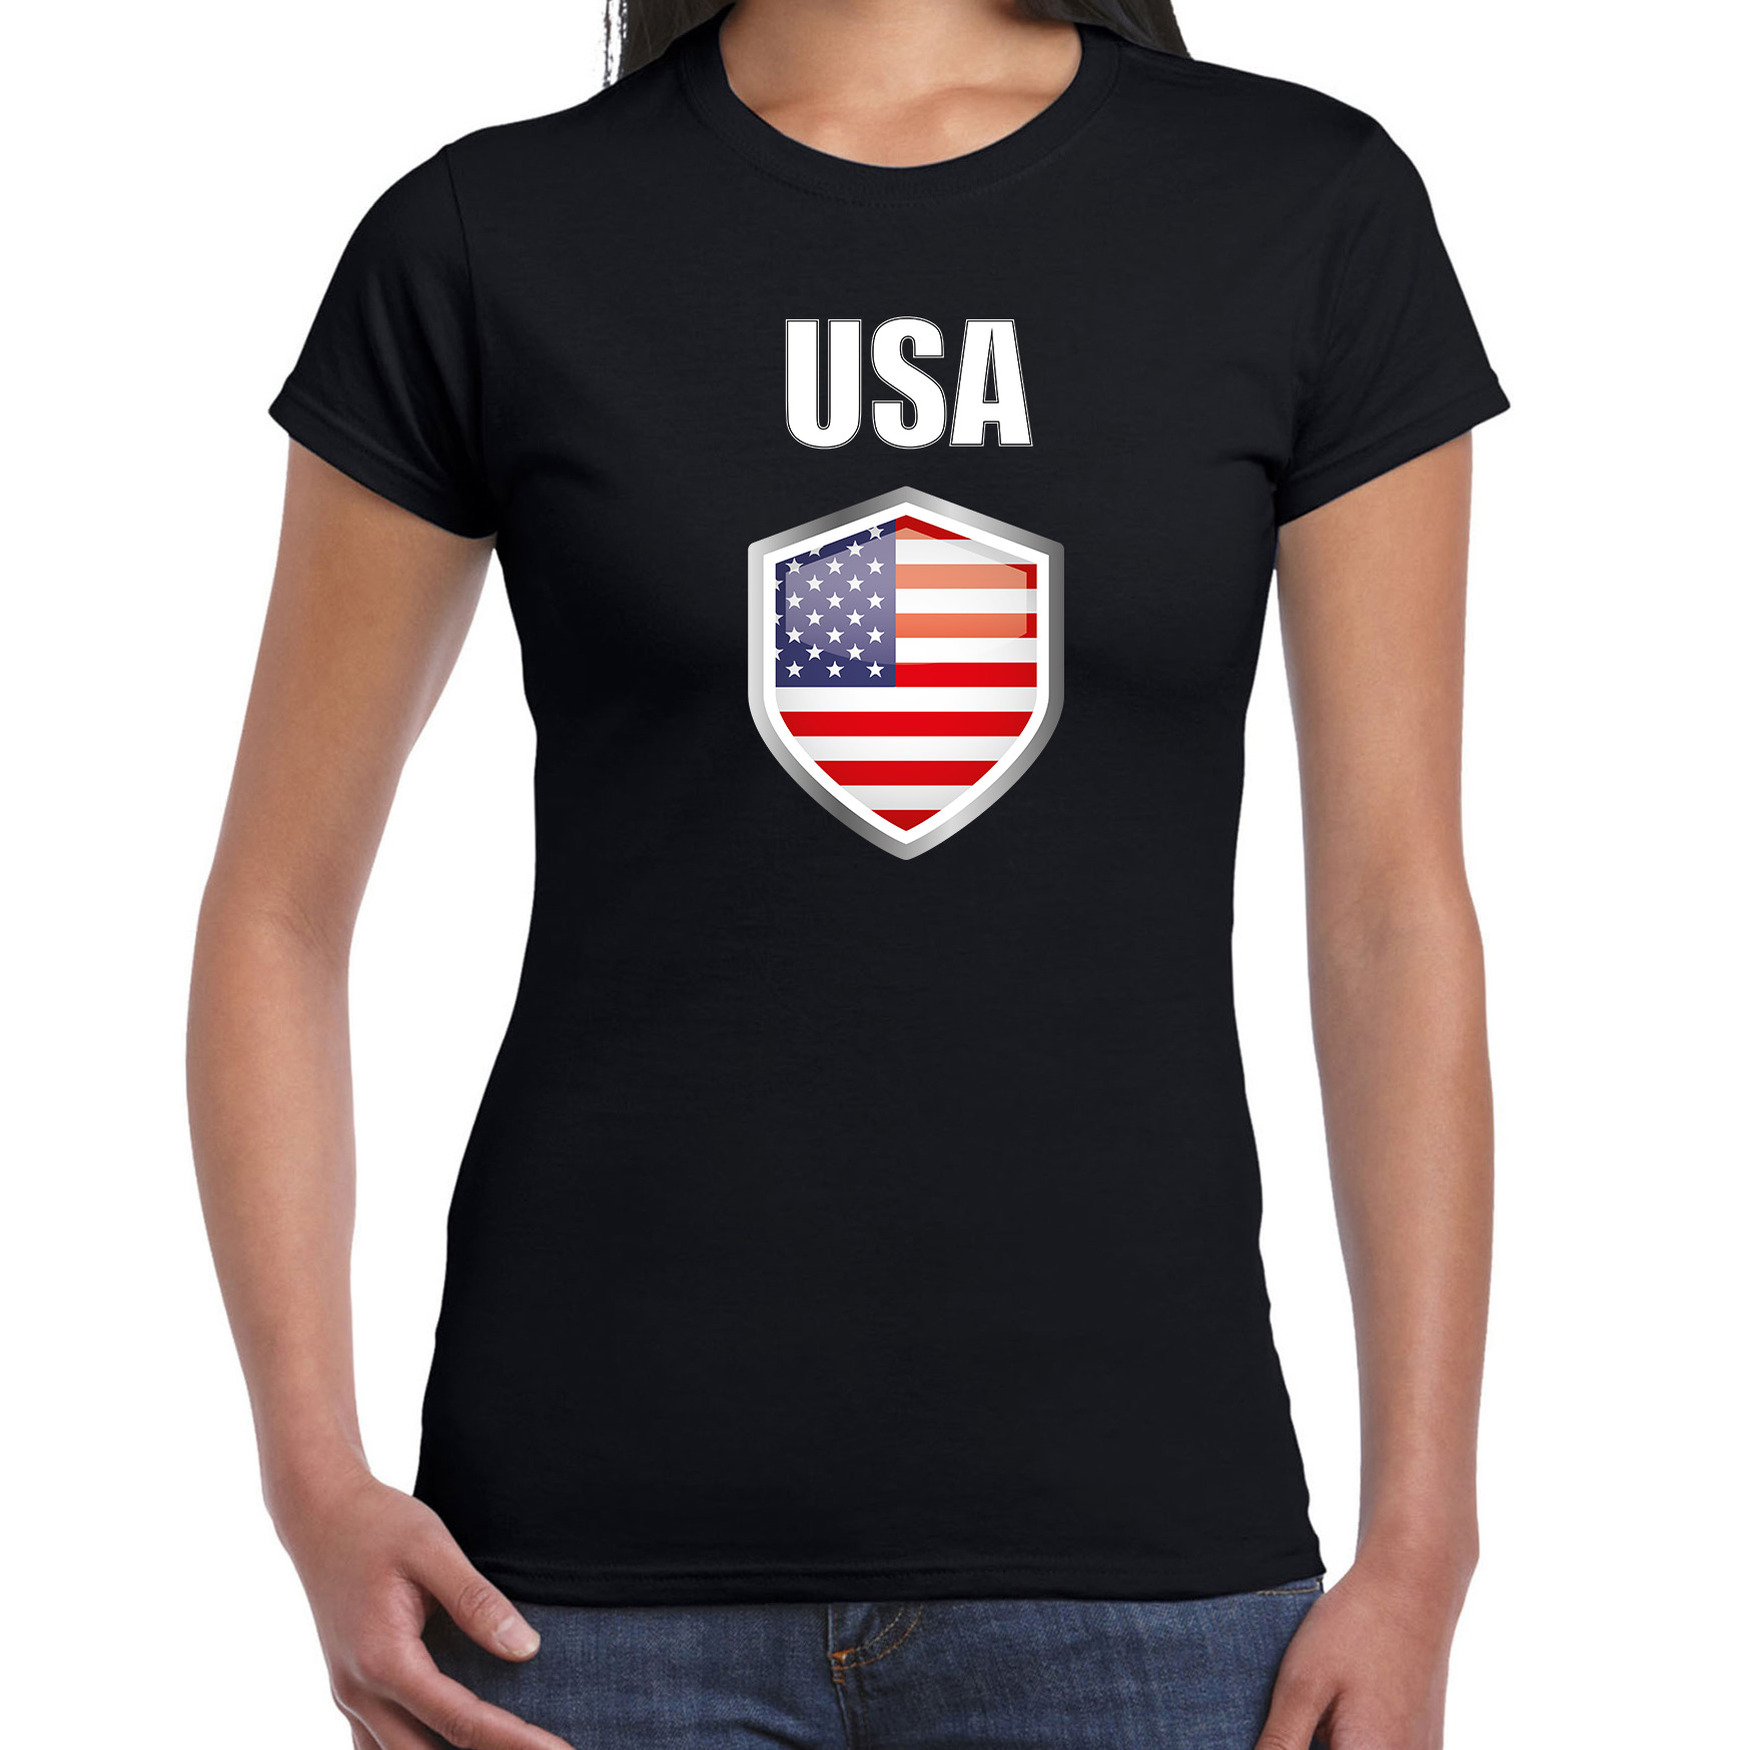 USA landen supporter t-shirt met Amerikaanse vlag schild zwart dames